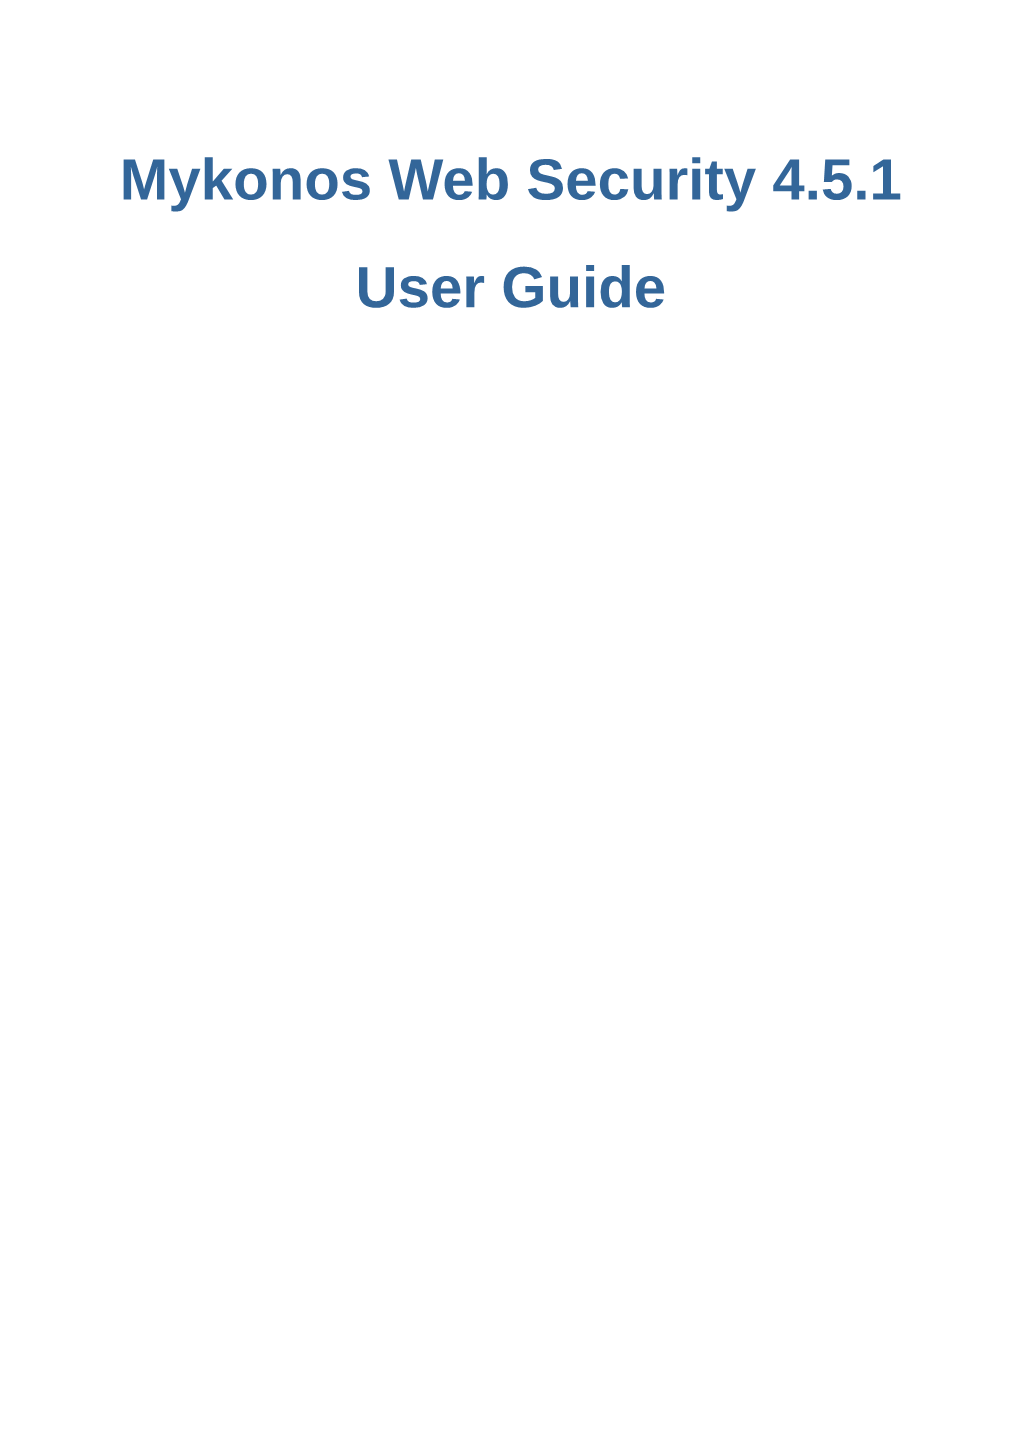 Mykonos Web Security 4.5.1 User Guide